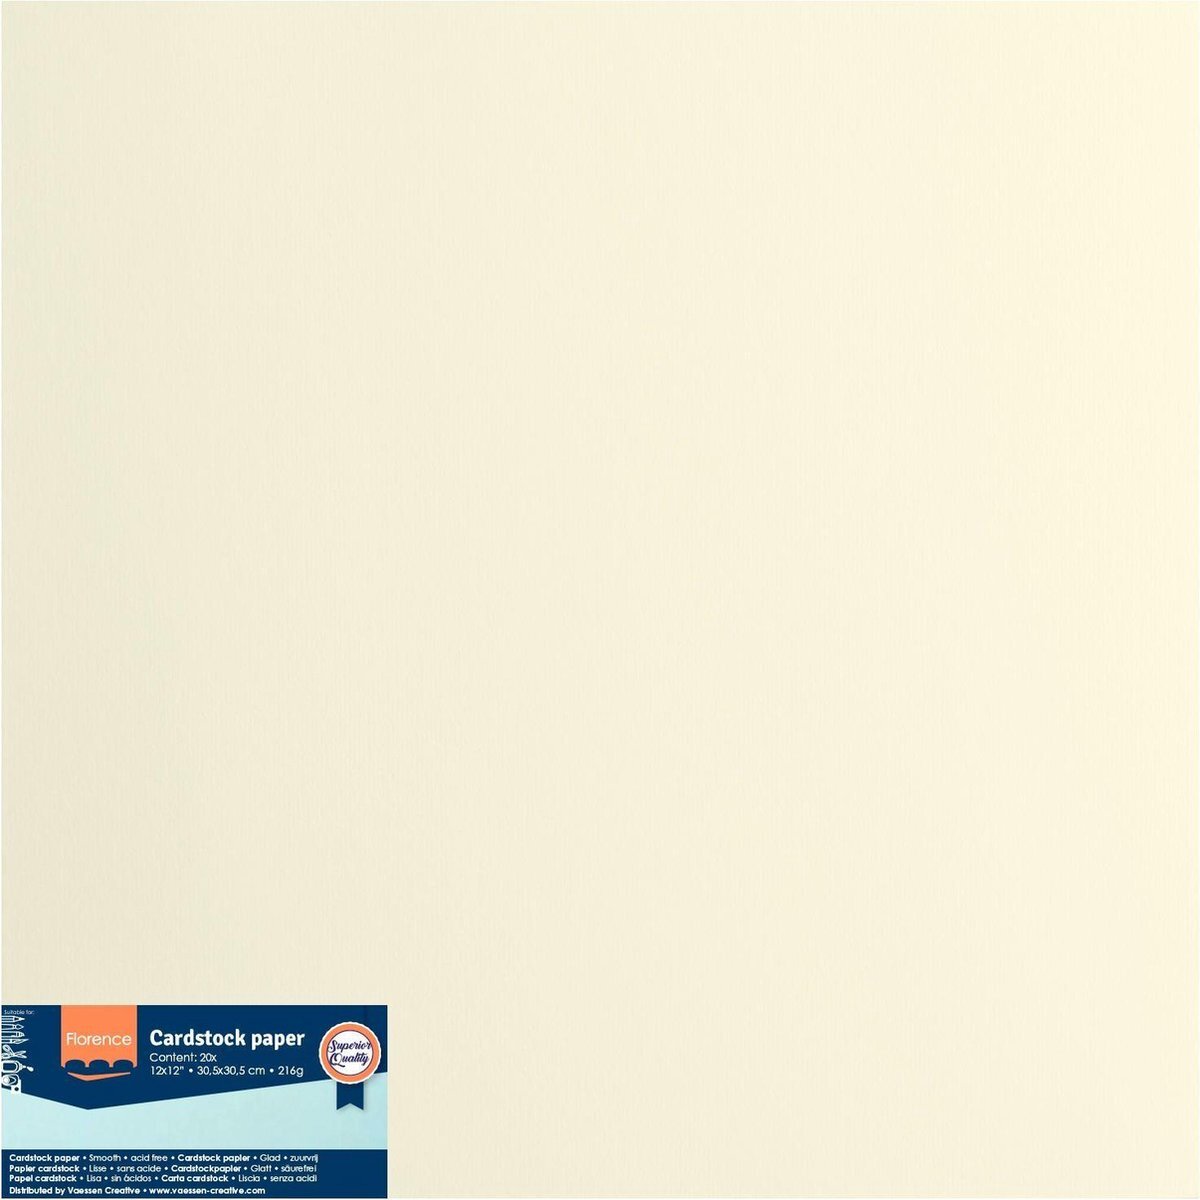 Florence Cardstock - Raffia - 305x305mm - Gladde textuur - 216g